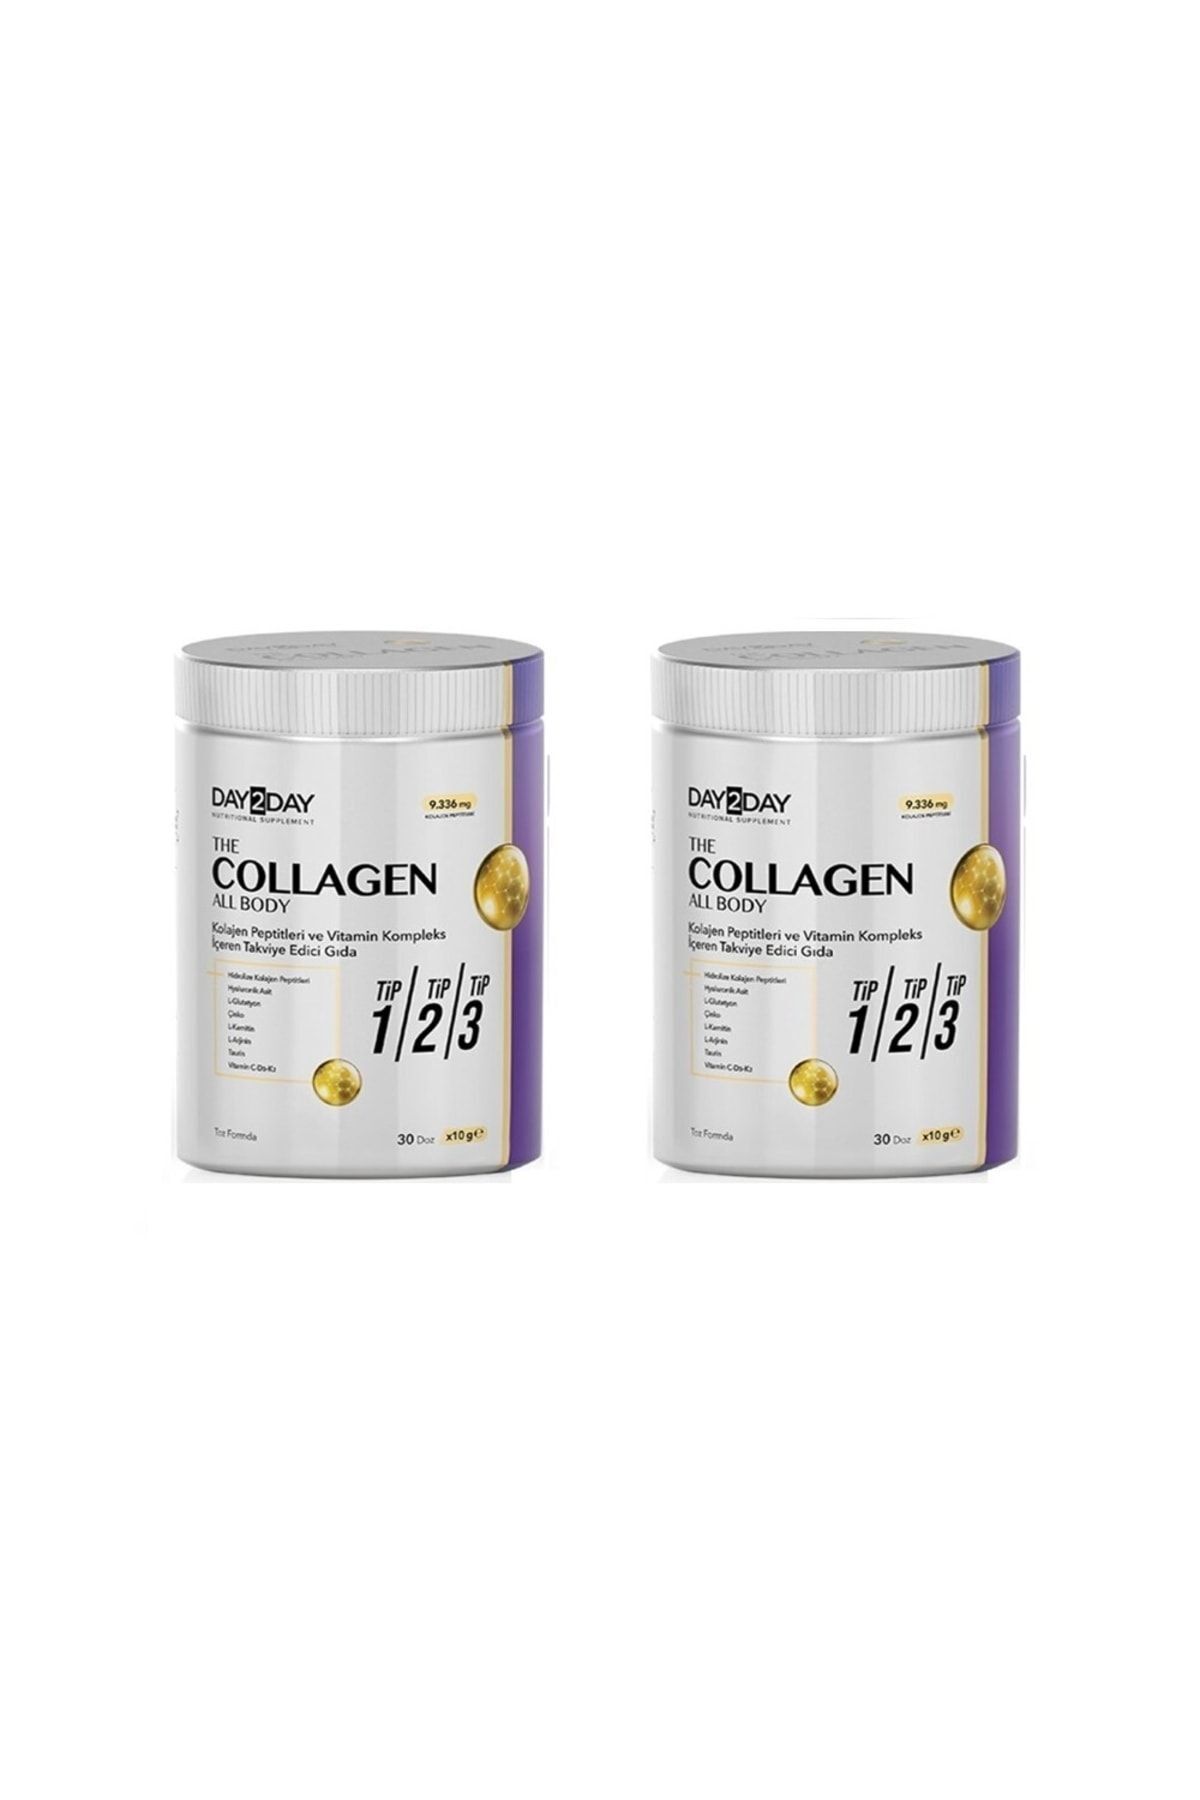 DAY2DAY The Collagen All Body Takviye Edici Gıda 300 Gr 1 Alana 1 Bedava